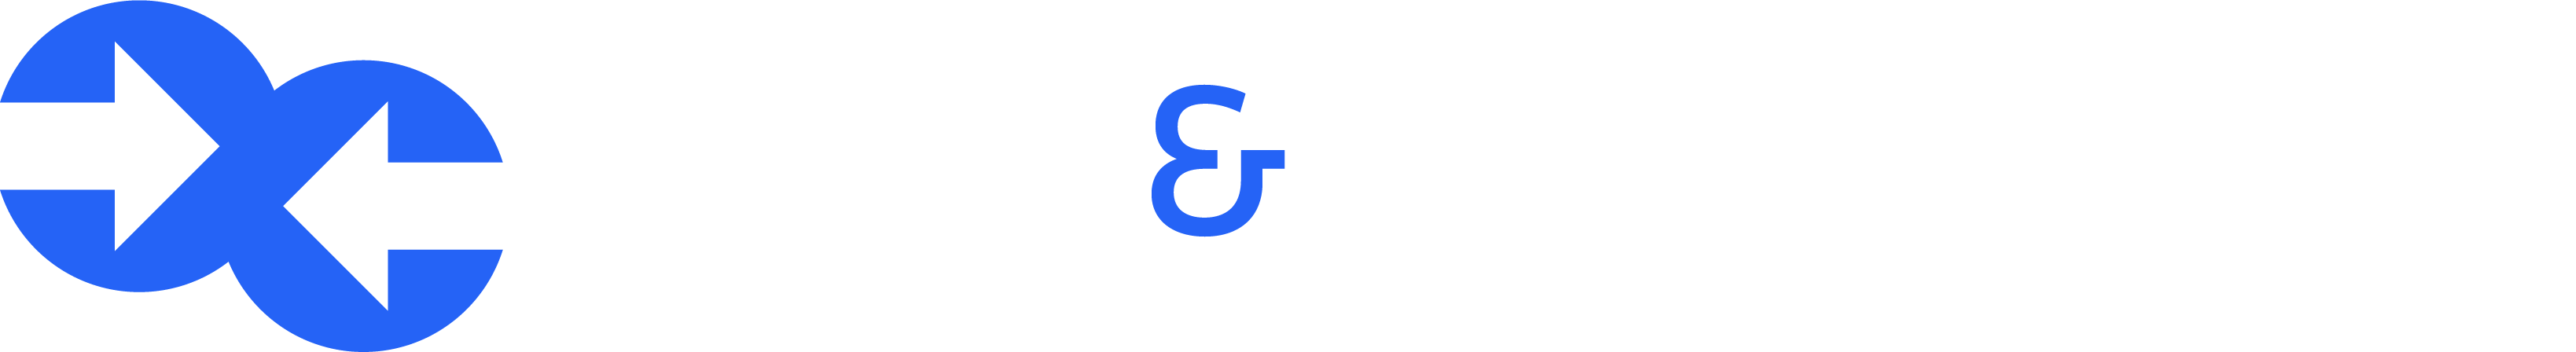 click and conversion logo